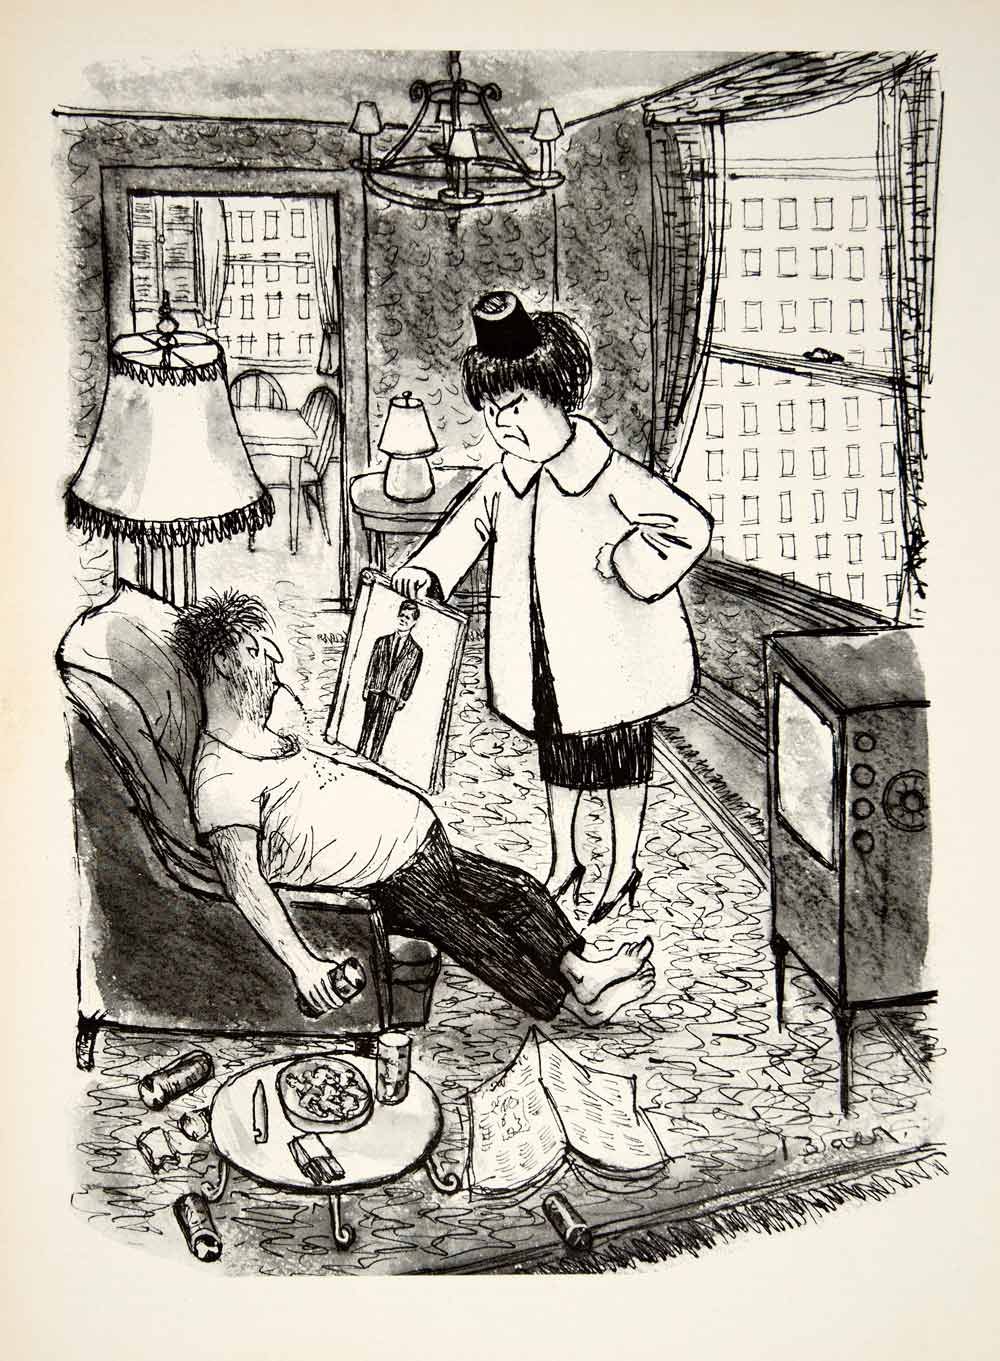 1960s housewife porn cartoons